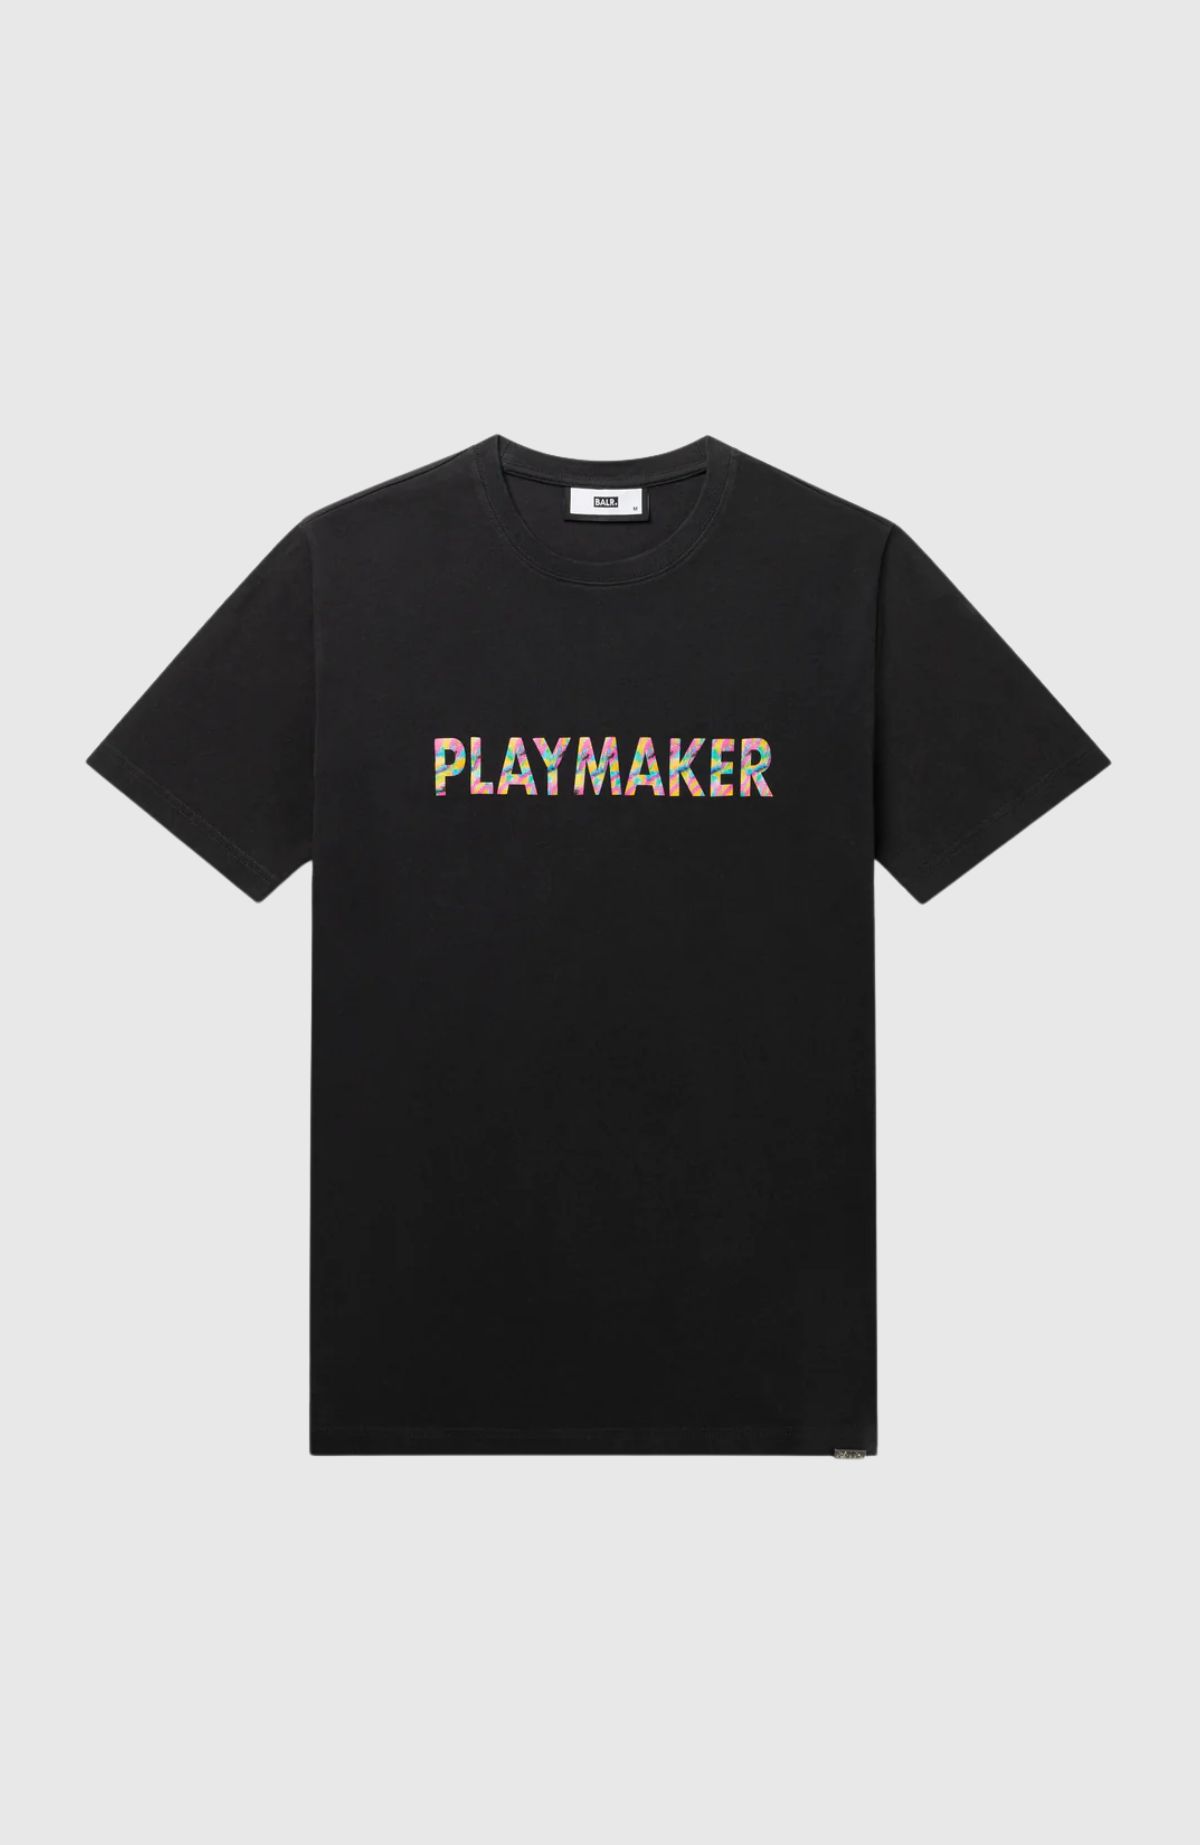 Olaf Straight Playmaker T-Shirt - Maxx Group